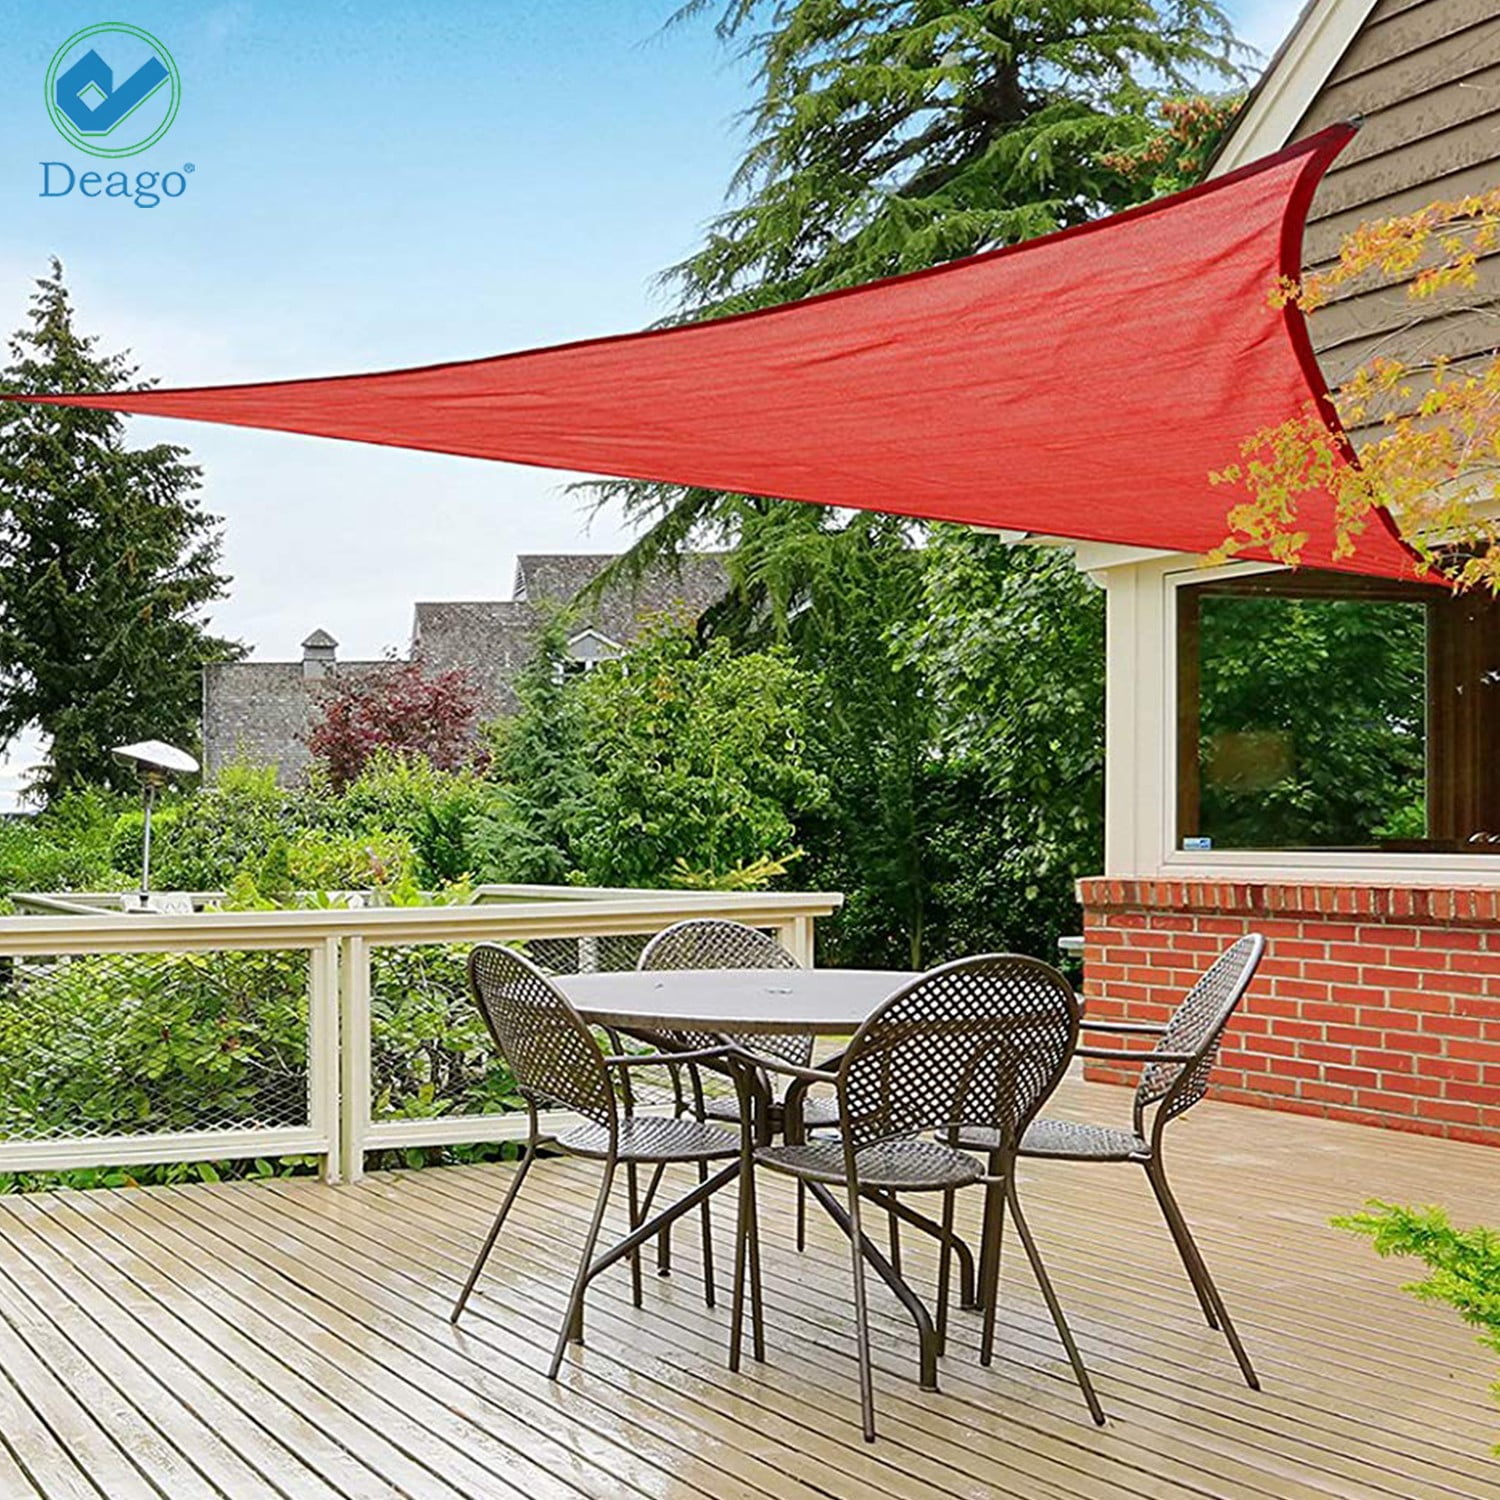 Sun Shade Sail,6 x 8 Rectangle Durable Roll Up UV Block Sun Shade Cover Cloth for Outdoor Patio Garden Canopy Sunshades Sail Grey